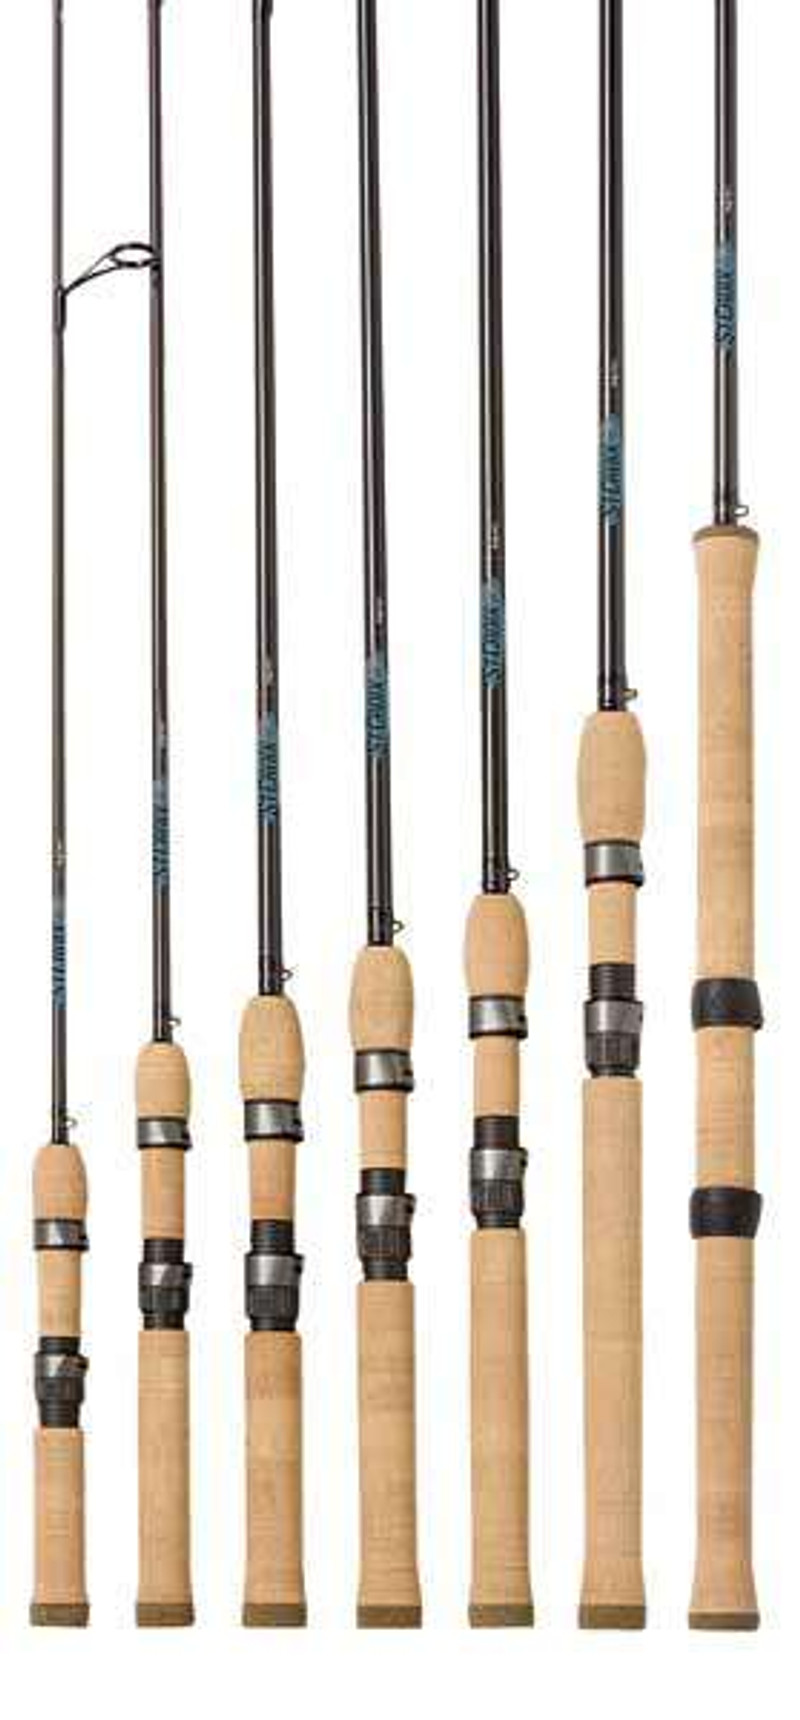 St. Croix Avid AVS Series Salmon and Steelhead Spinning Rods